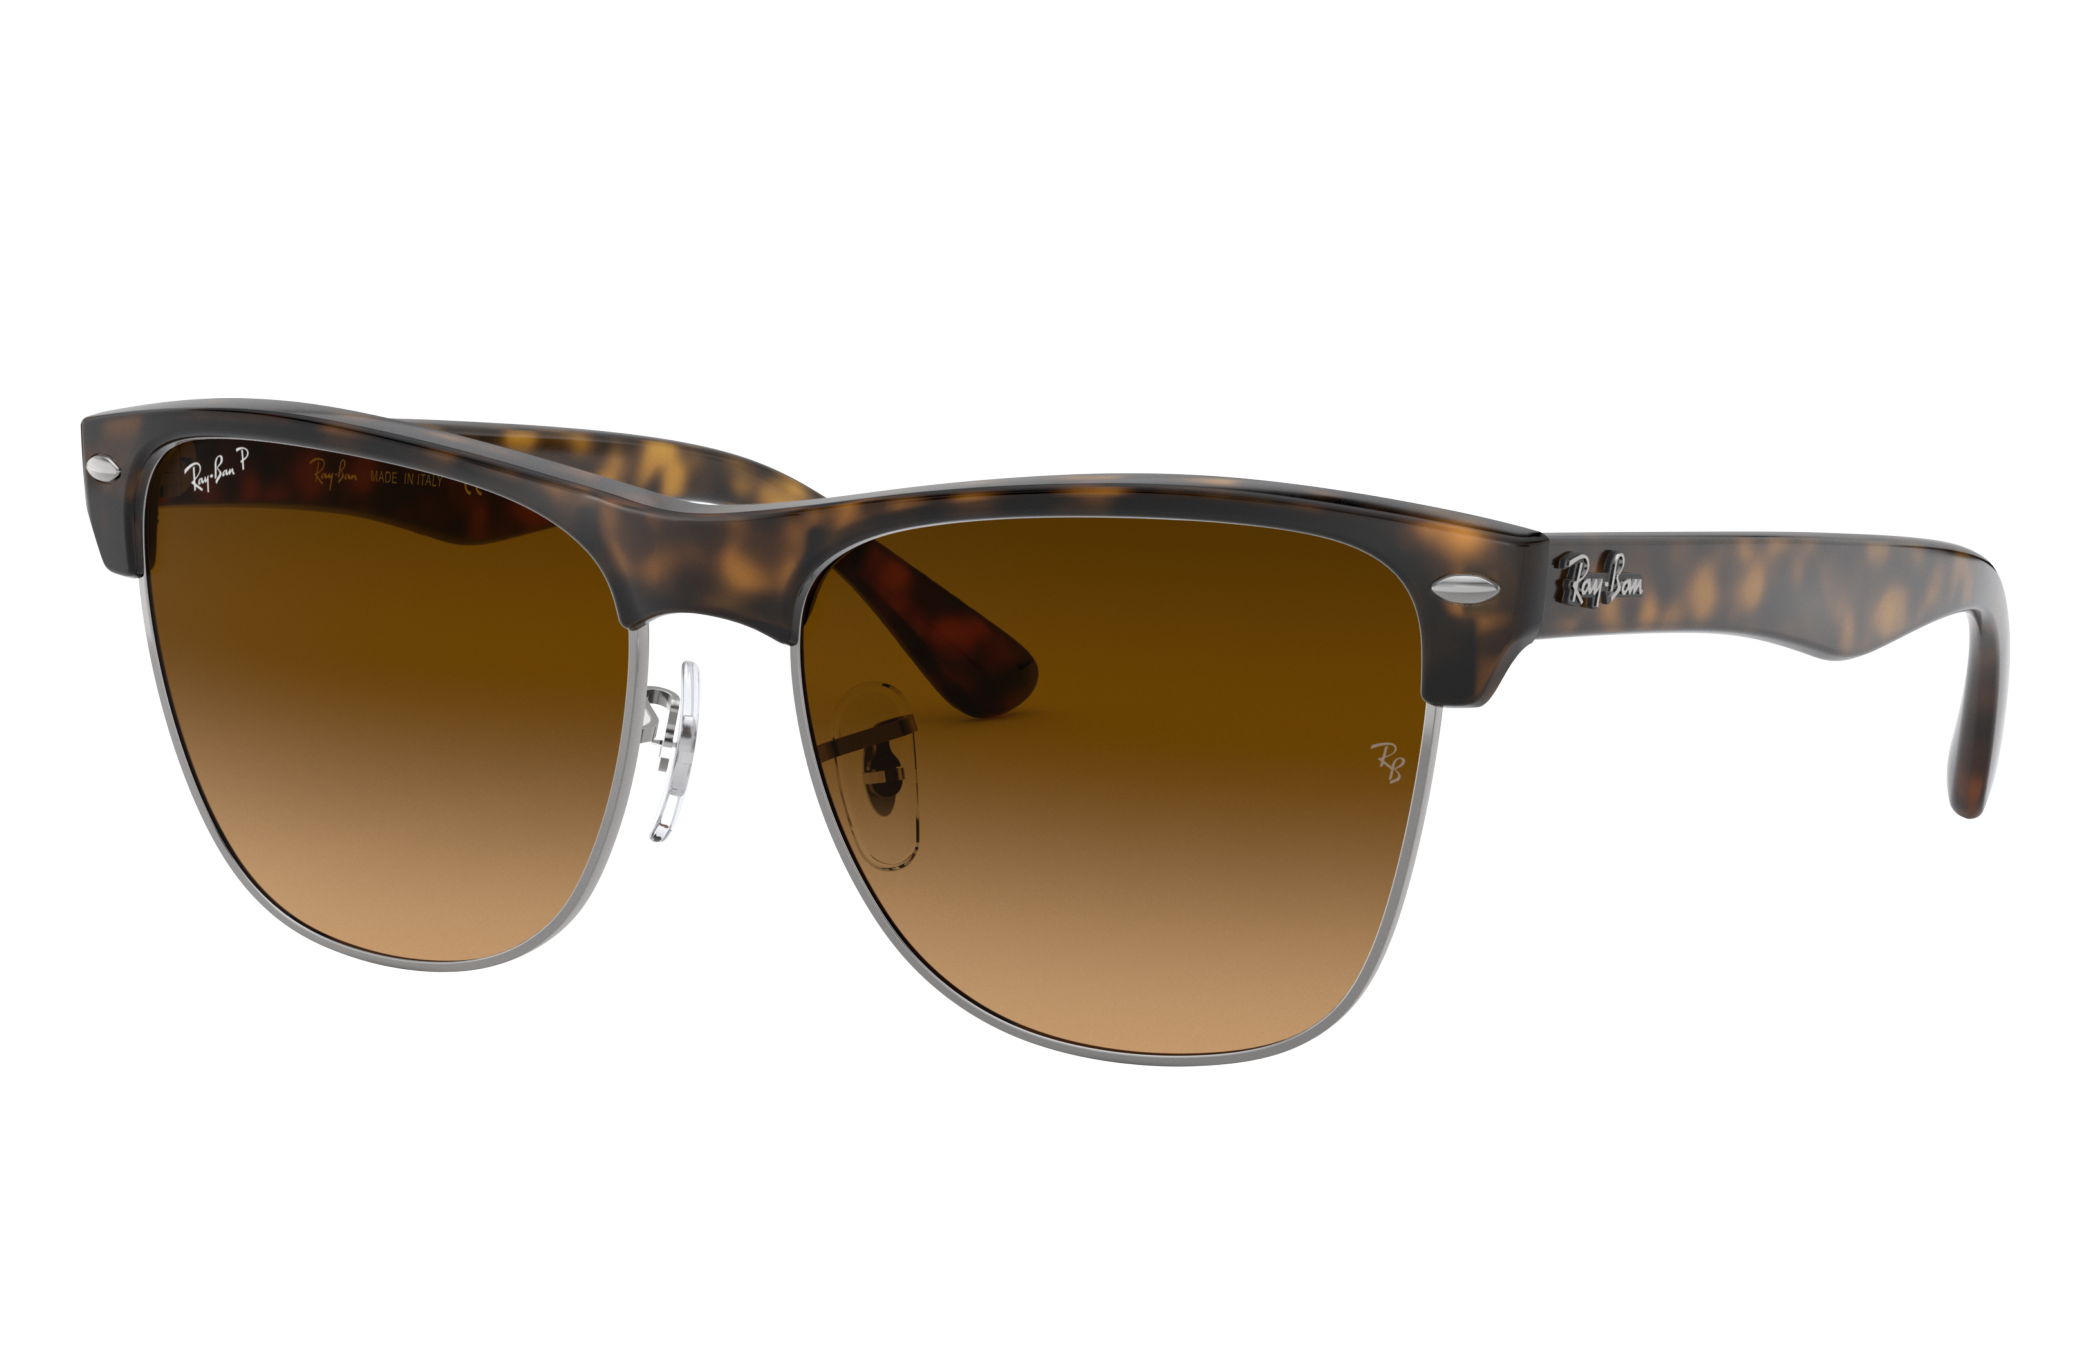 Clubmaster Oversized Sunglasses in Tartaruga and Castanho | Ray-Ban®